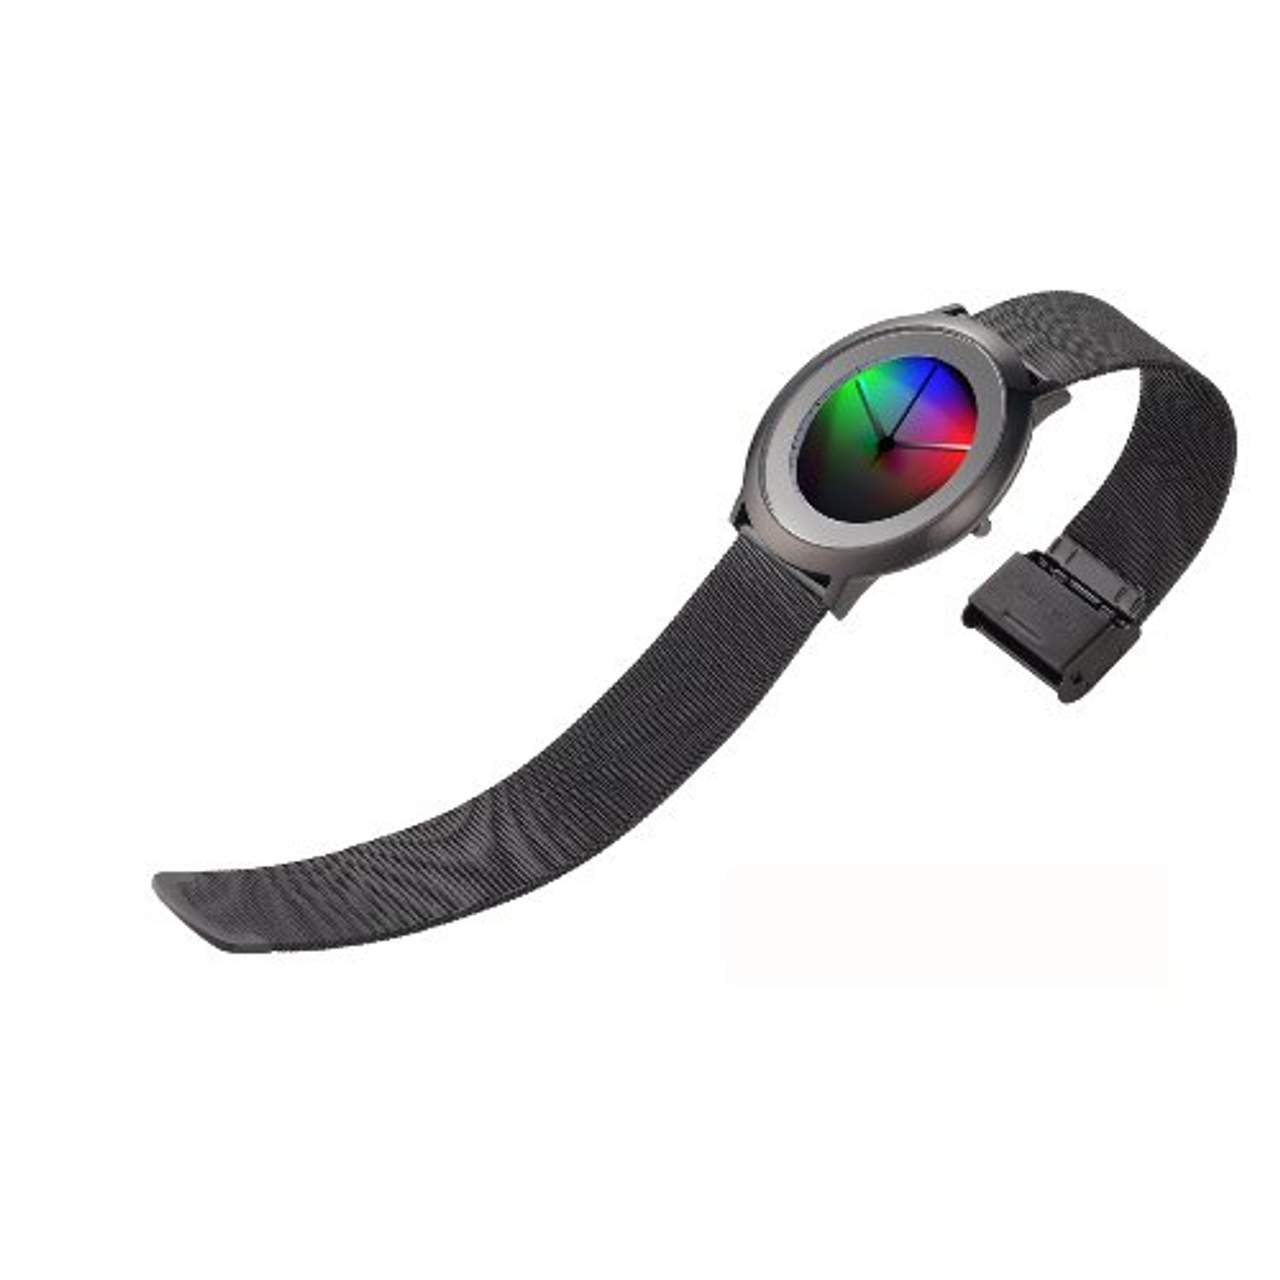 Colour Inspiration Unisex-Armbanduhr Analog Edelstahl beschichtet 2014L006